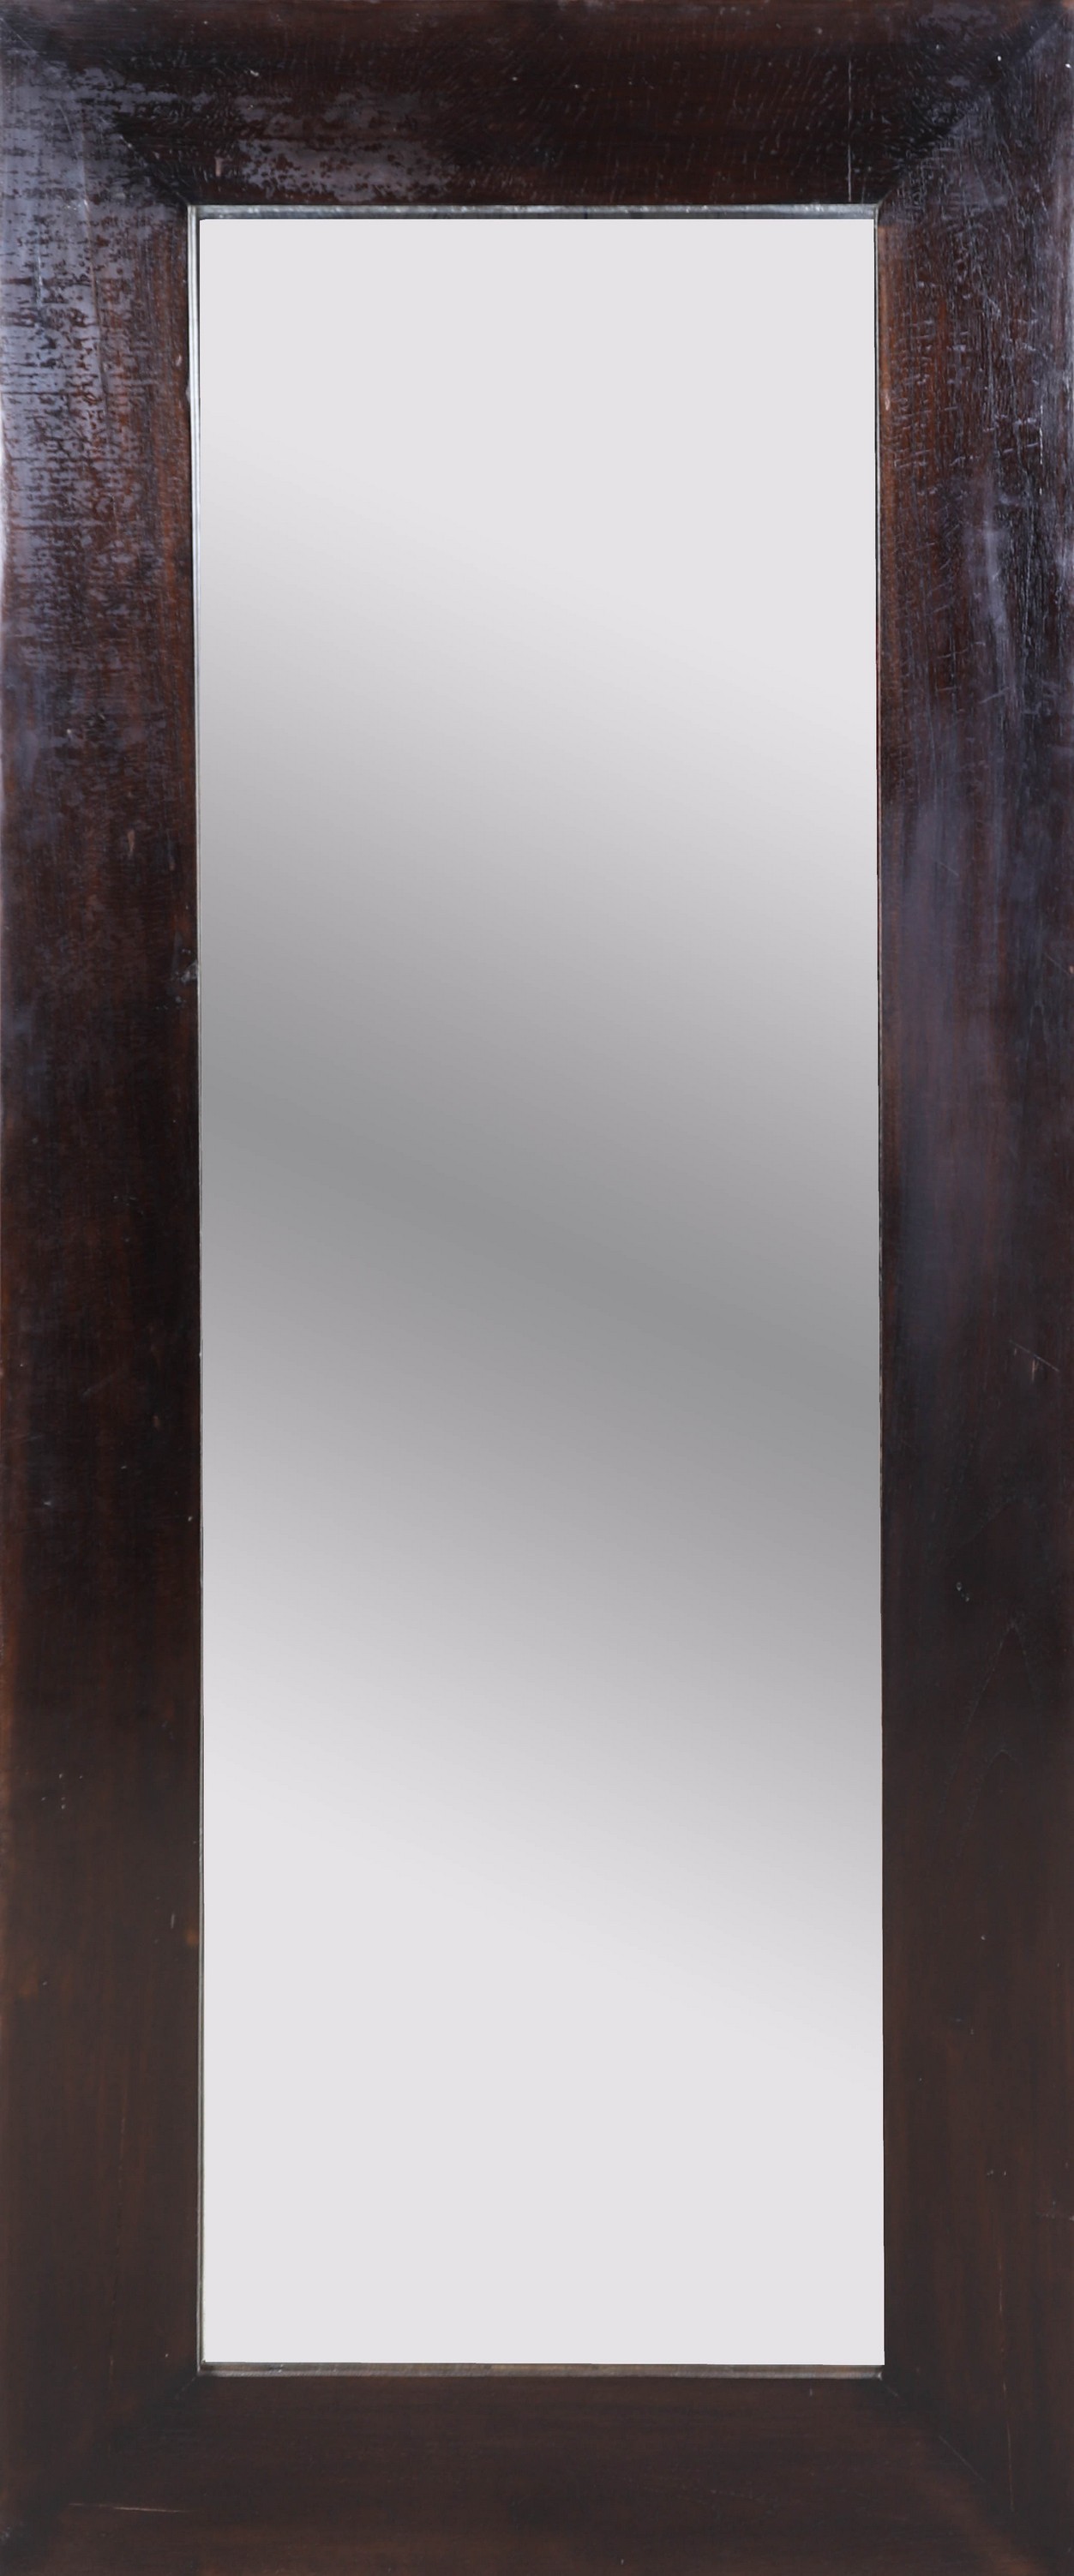 Large oak mirror, 75" x 31"